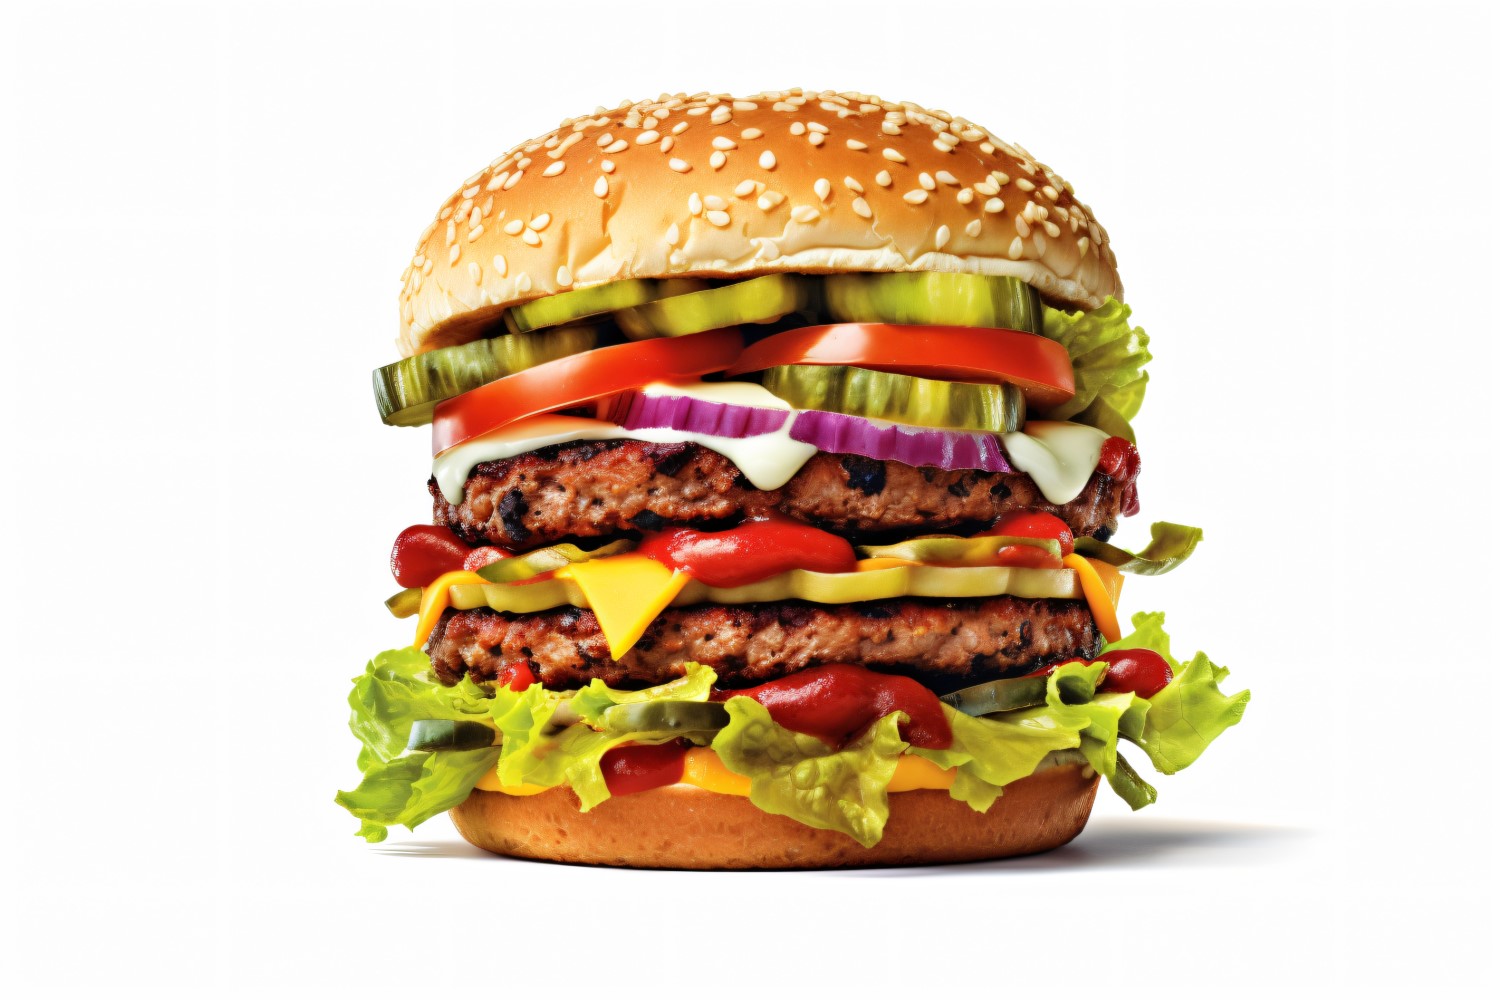 Tasty grilled Feta beef burger, on white background 87